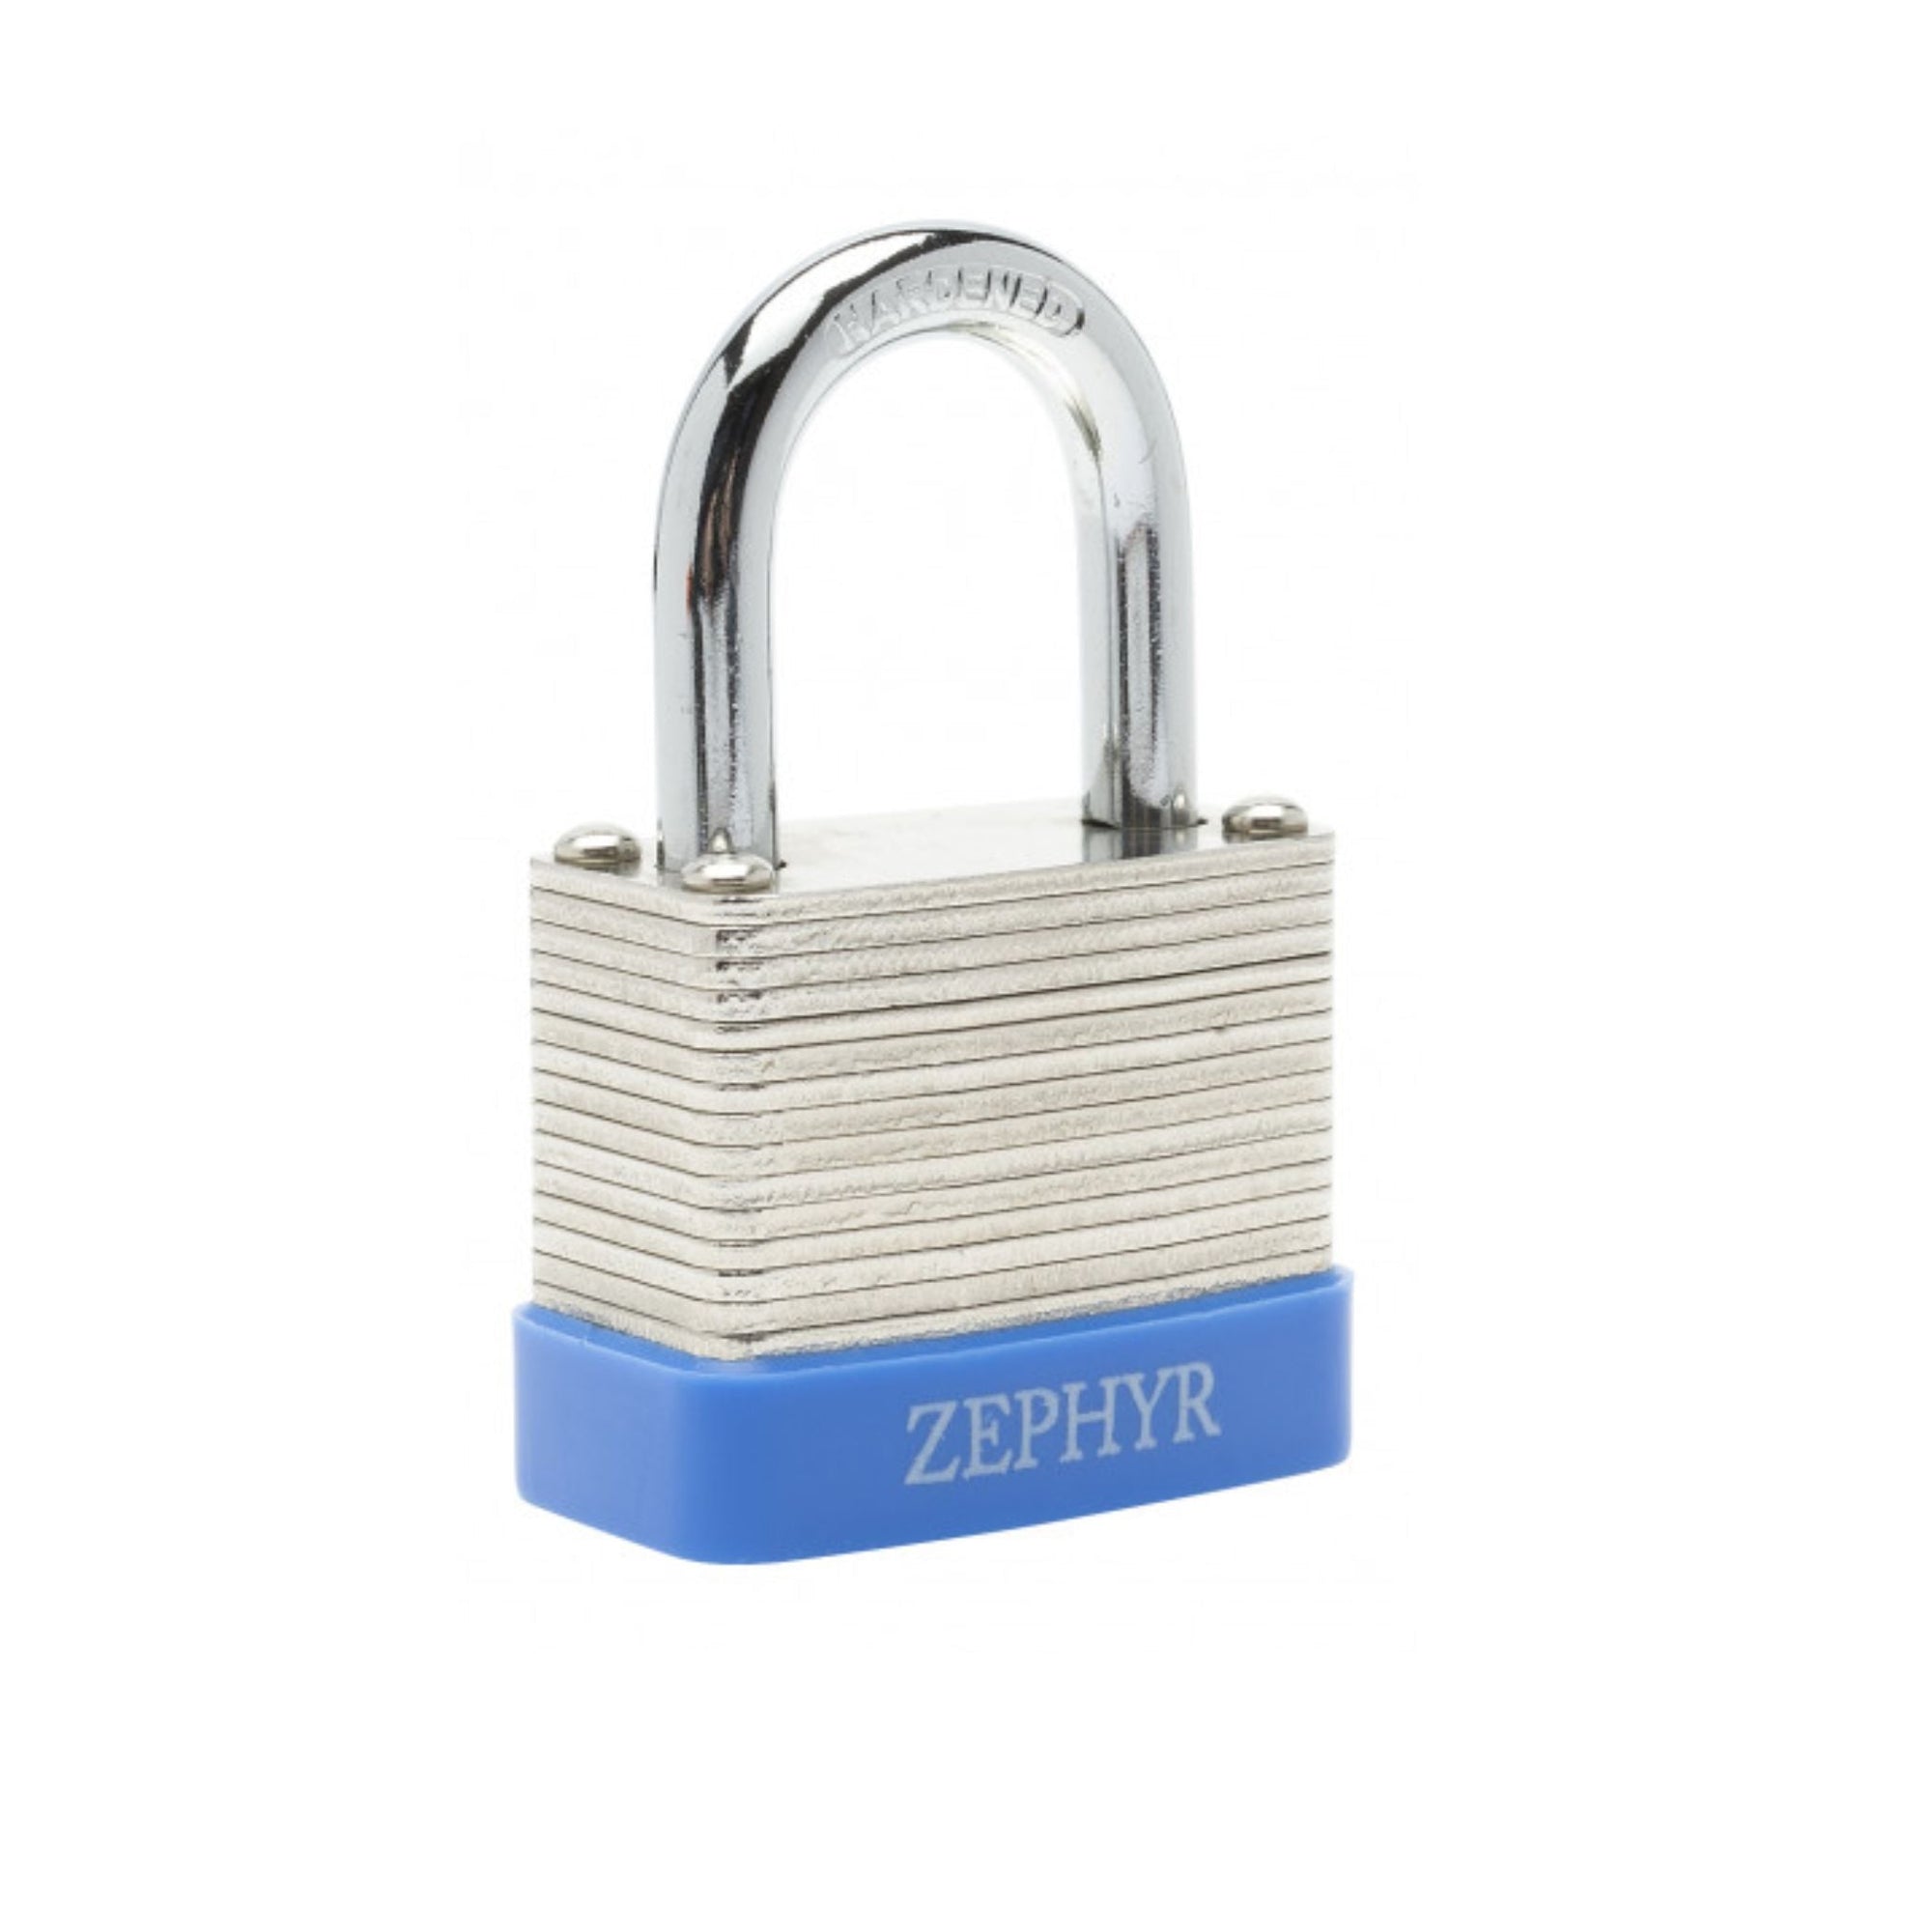 Zephyr Lock Laminated Steel Combination Locks 18074 & 18050 Padlocks - The Lock Source